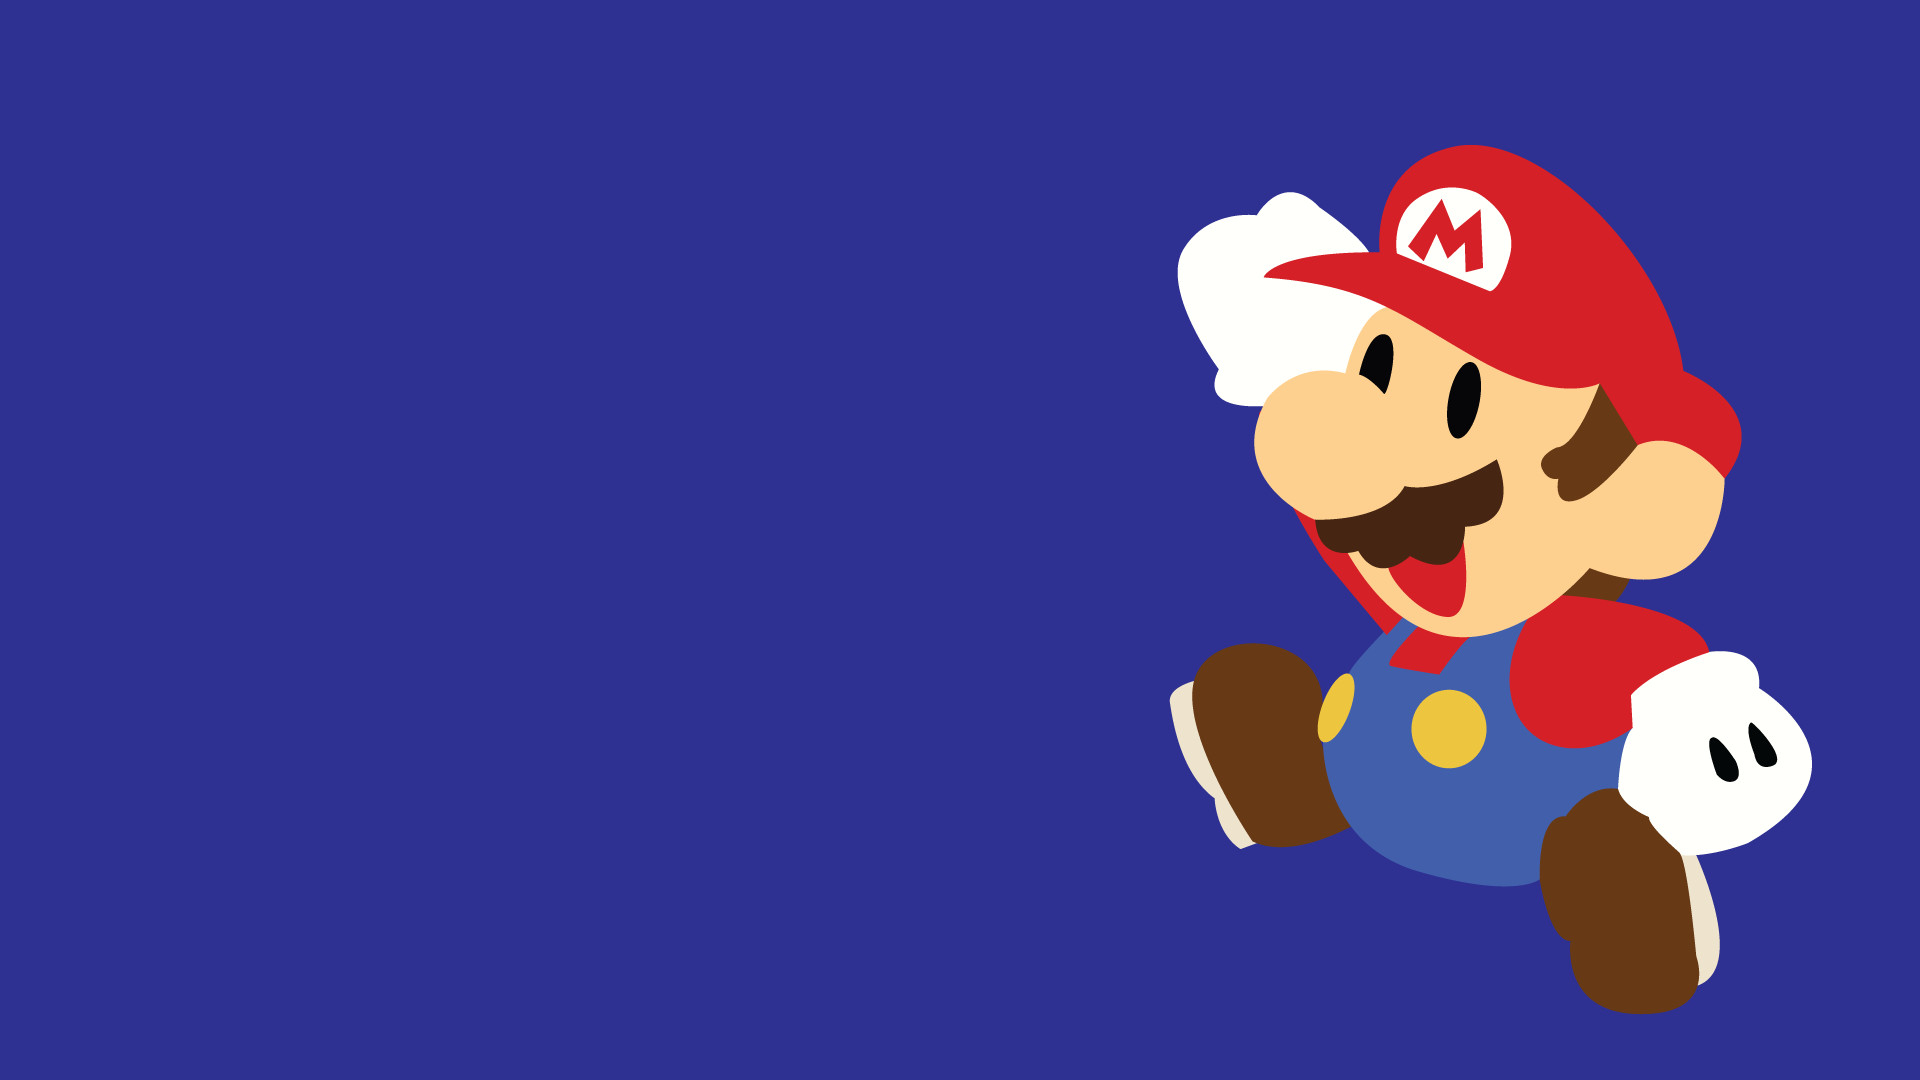 1920x1080 Mario HD Wallpaper | Hintergrund |  | ID:331539 - Wallpaper Abyss